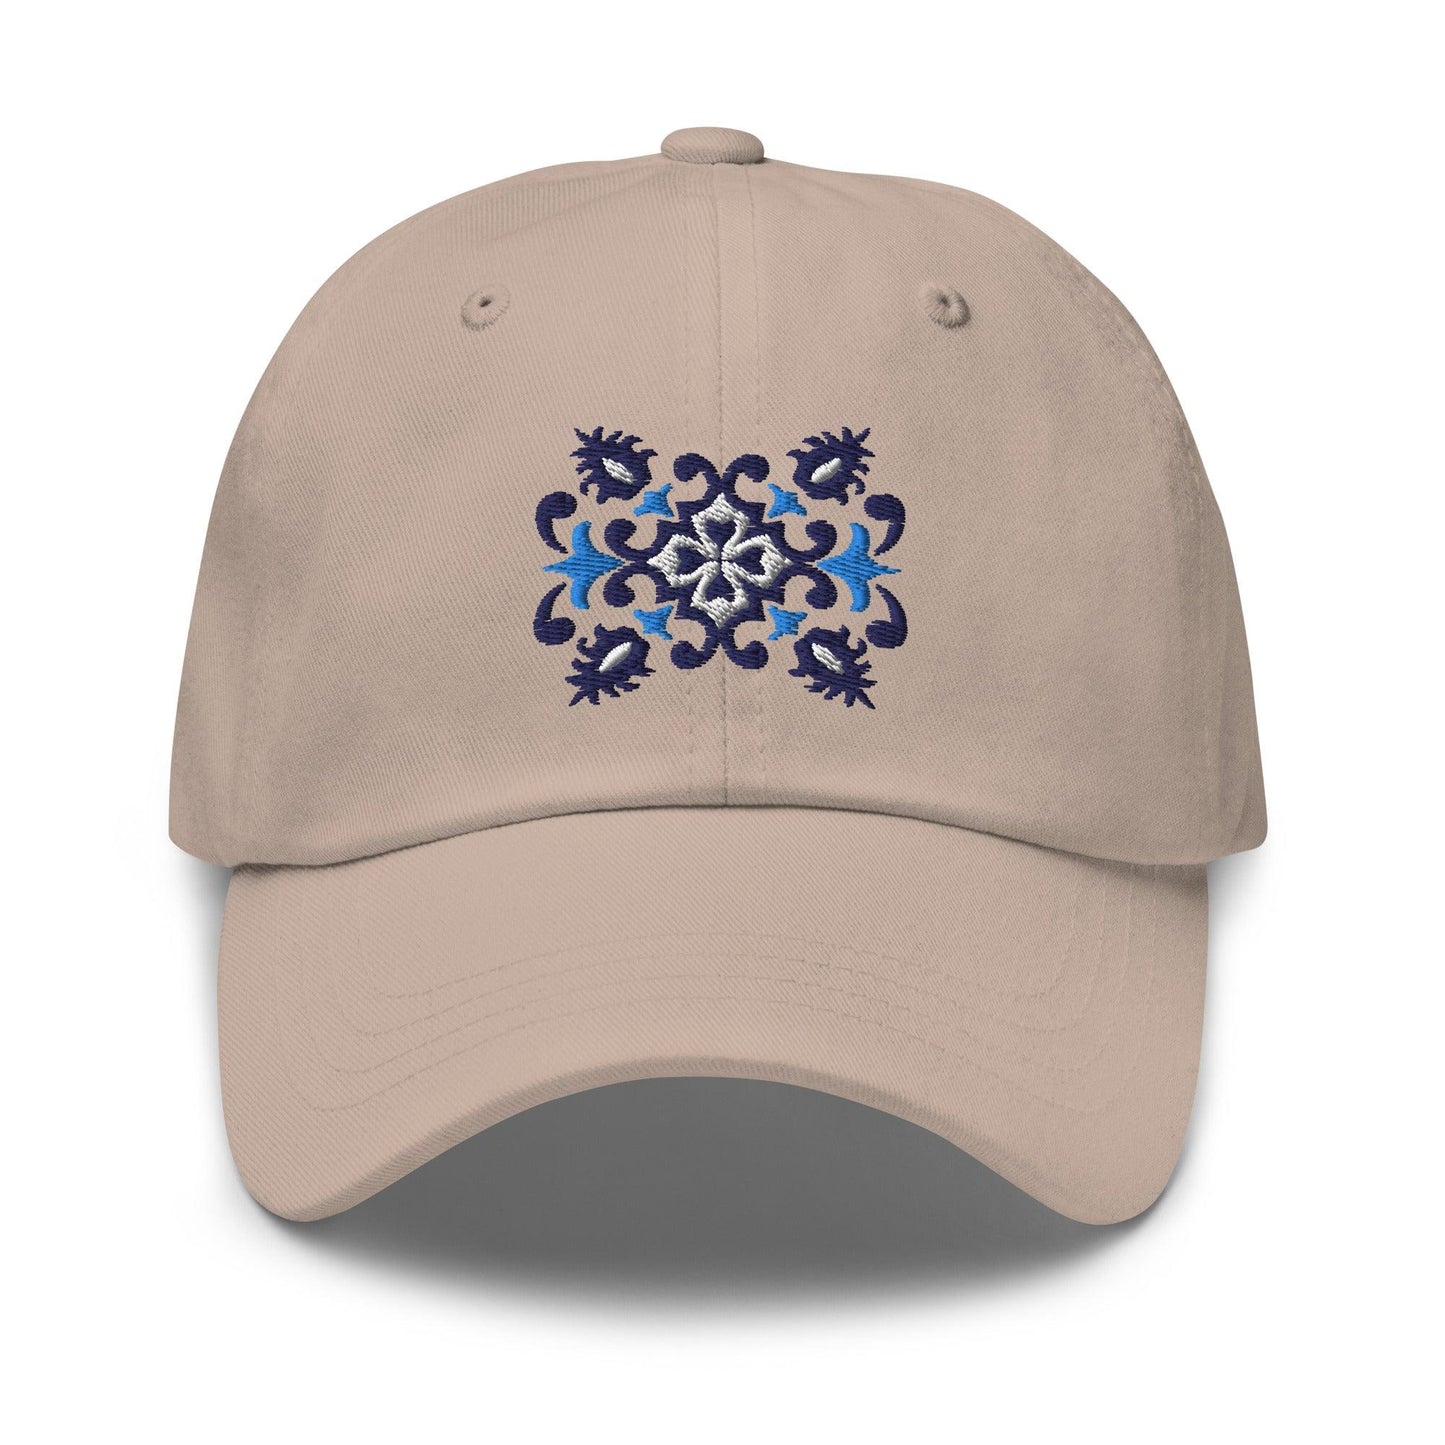 Portuguese Azulejo Tile Motif Embroidered Dad Hat - The Global Wanderer